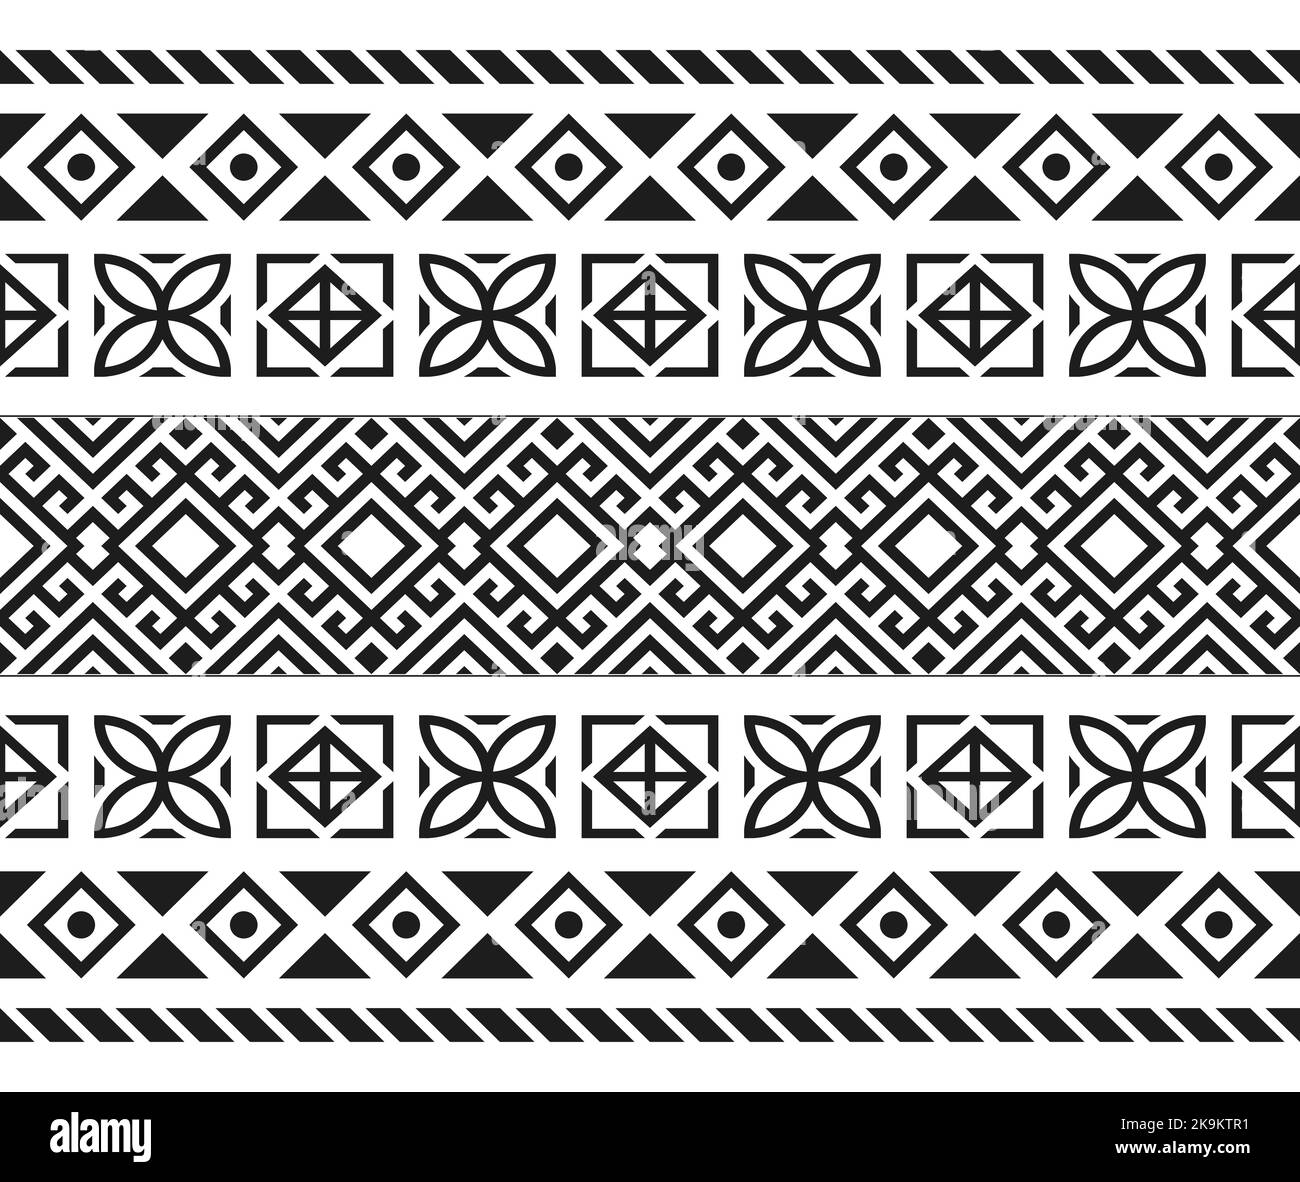 Tribal aztec ethnic geometric seamless pattern Stock Vector